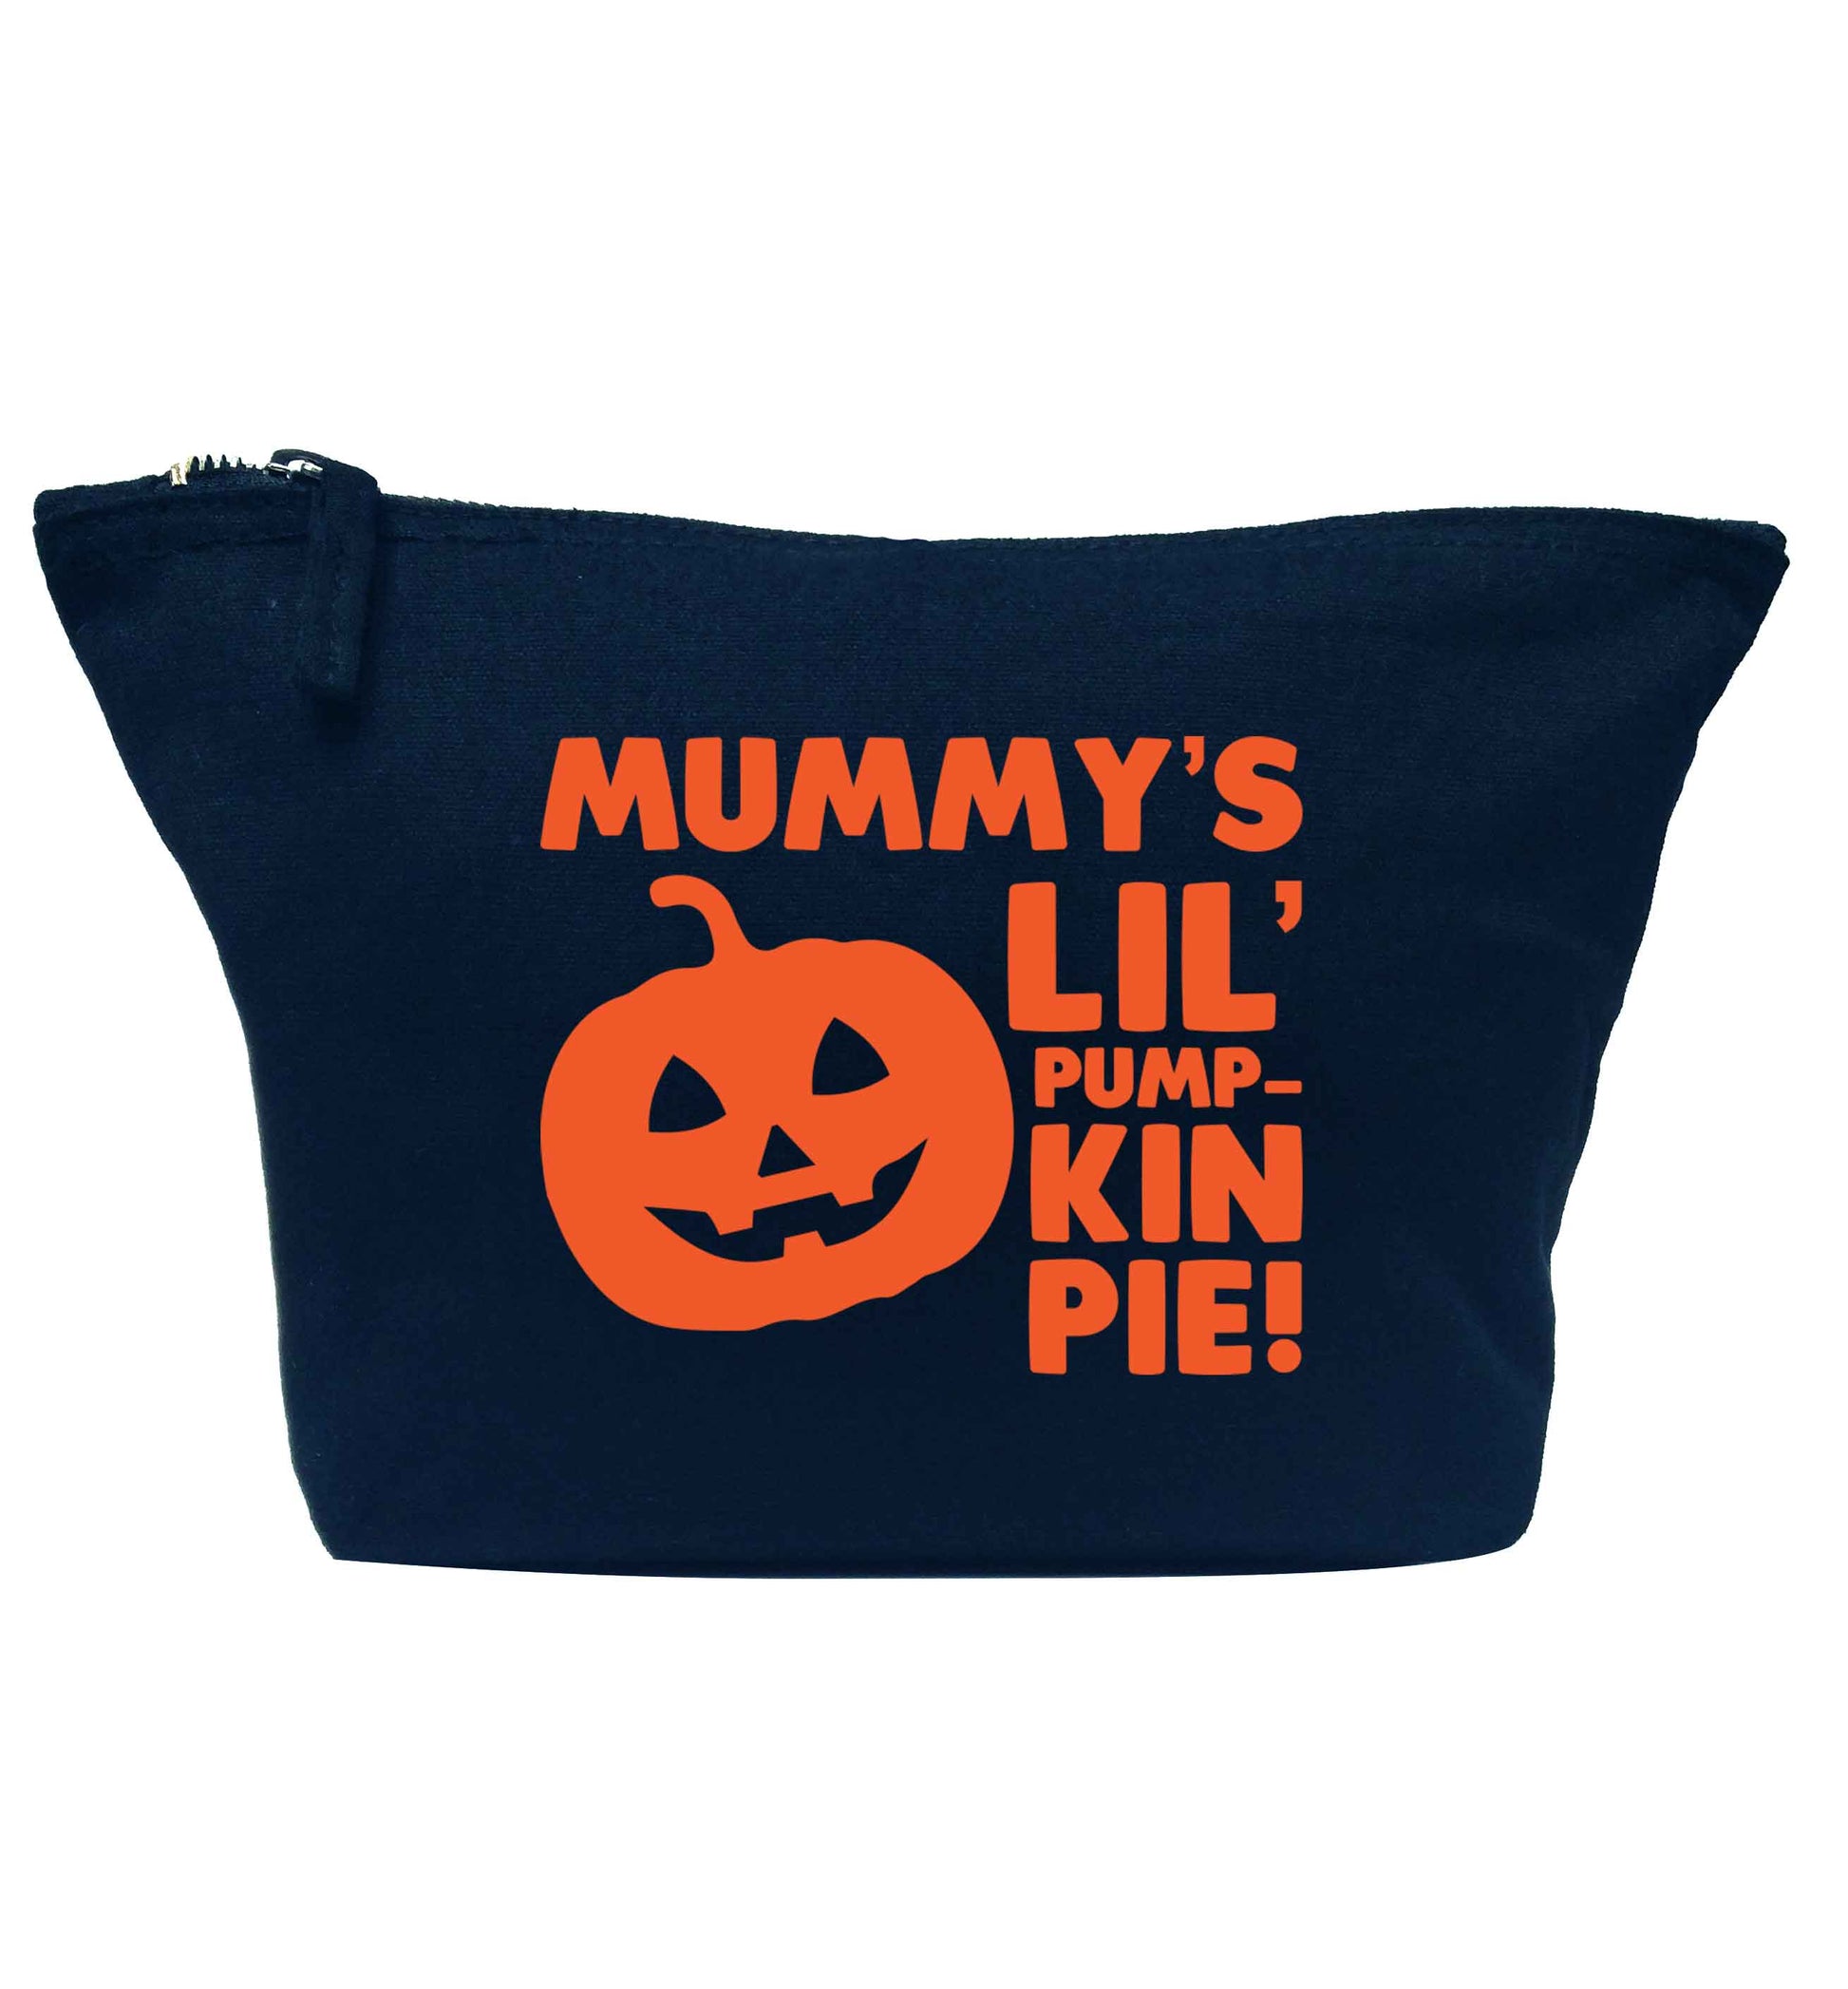 Mummy's lil' pumpkin pie navy makeup bag